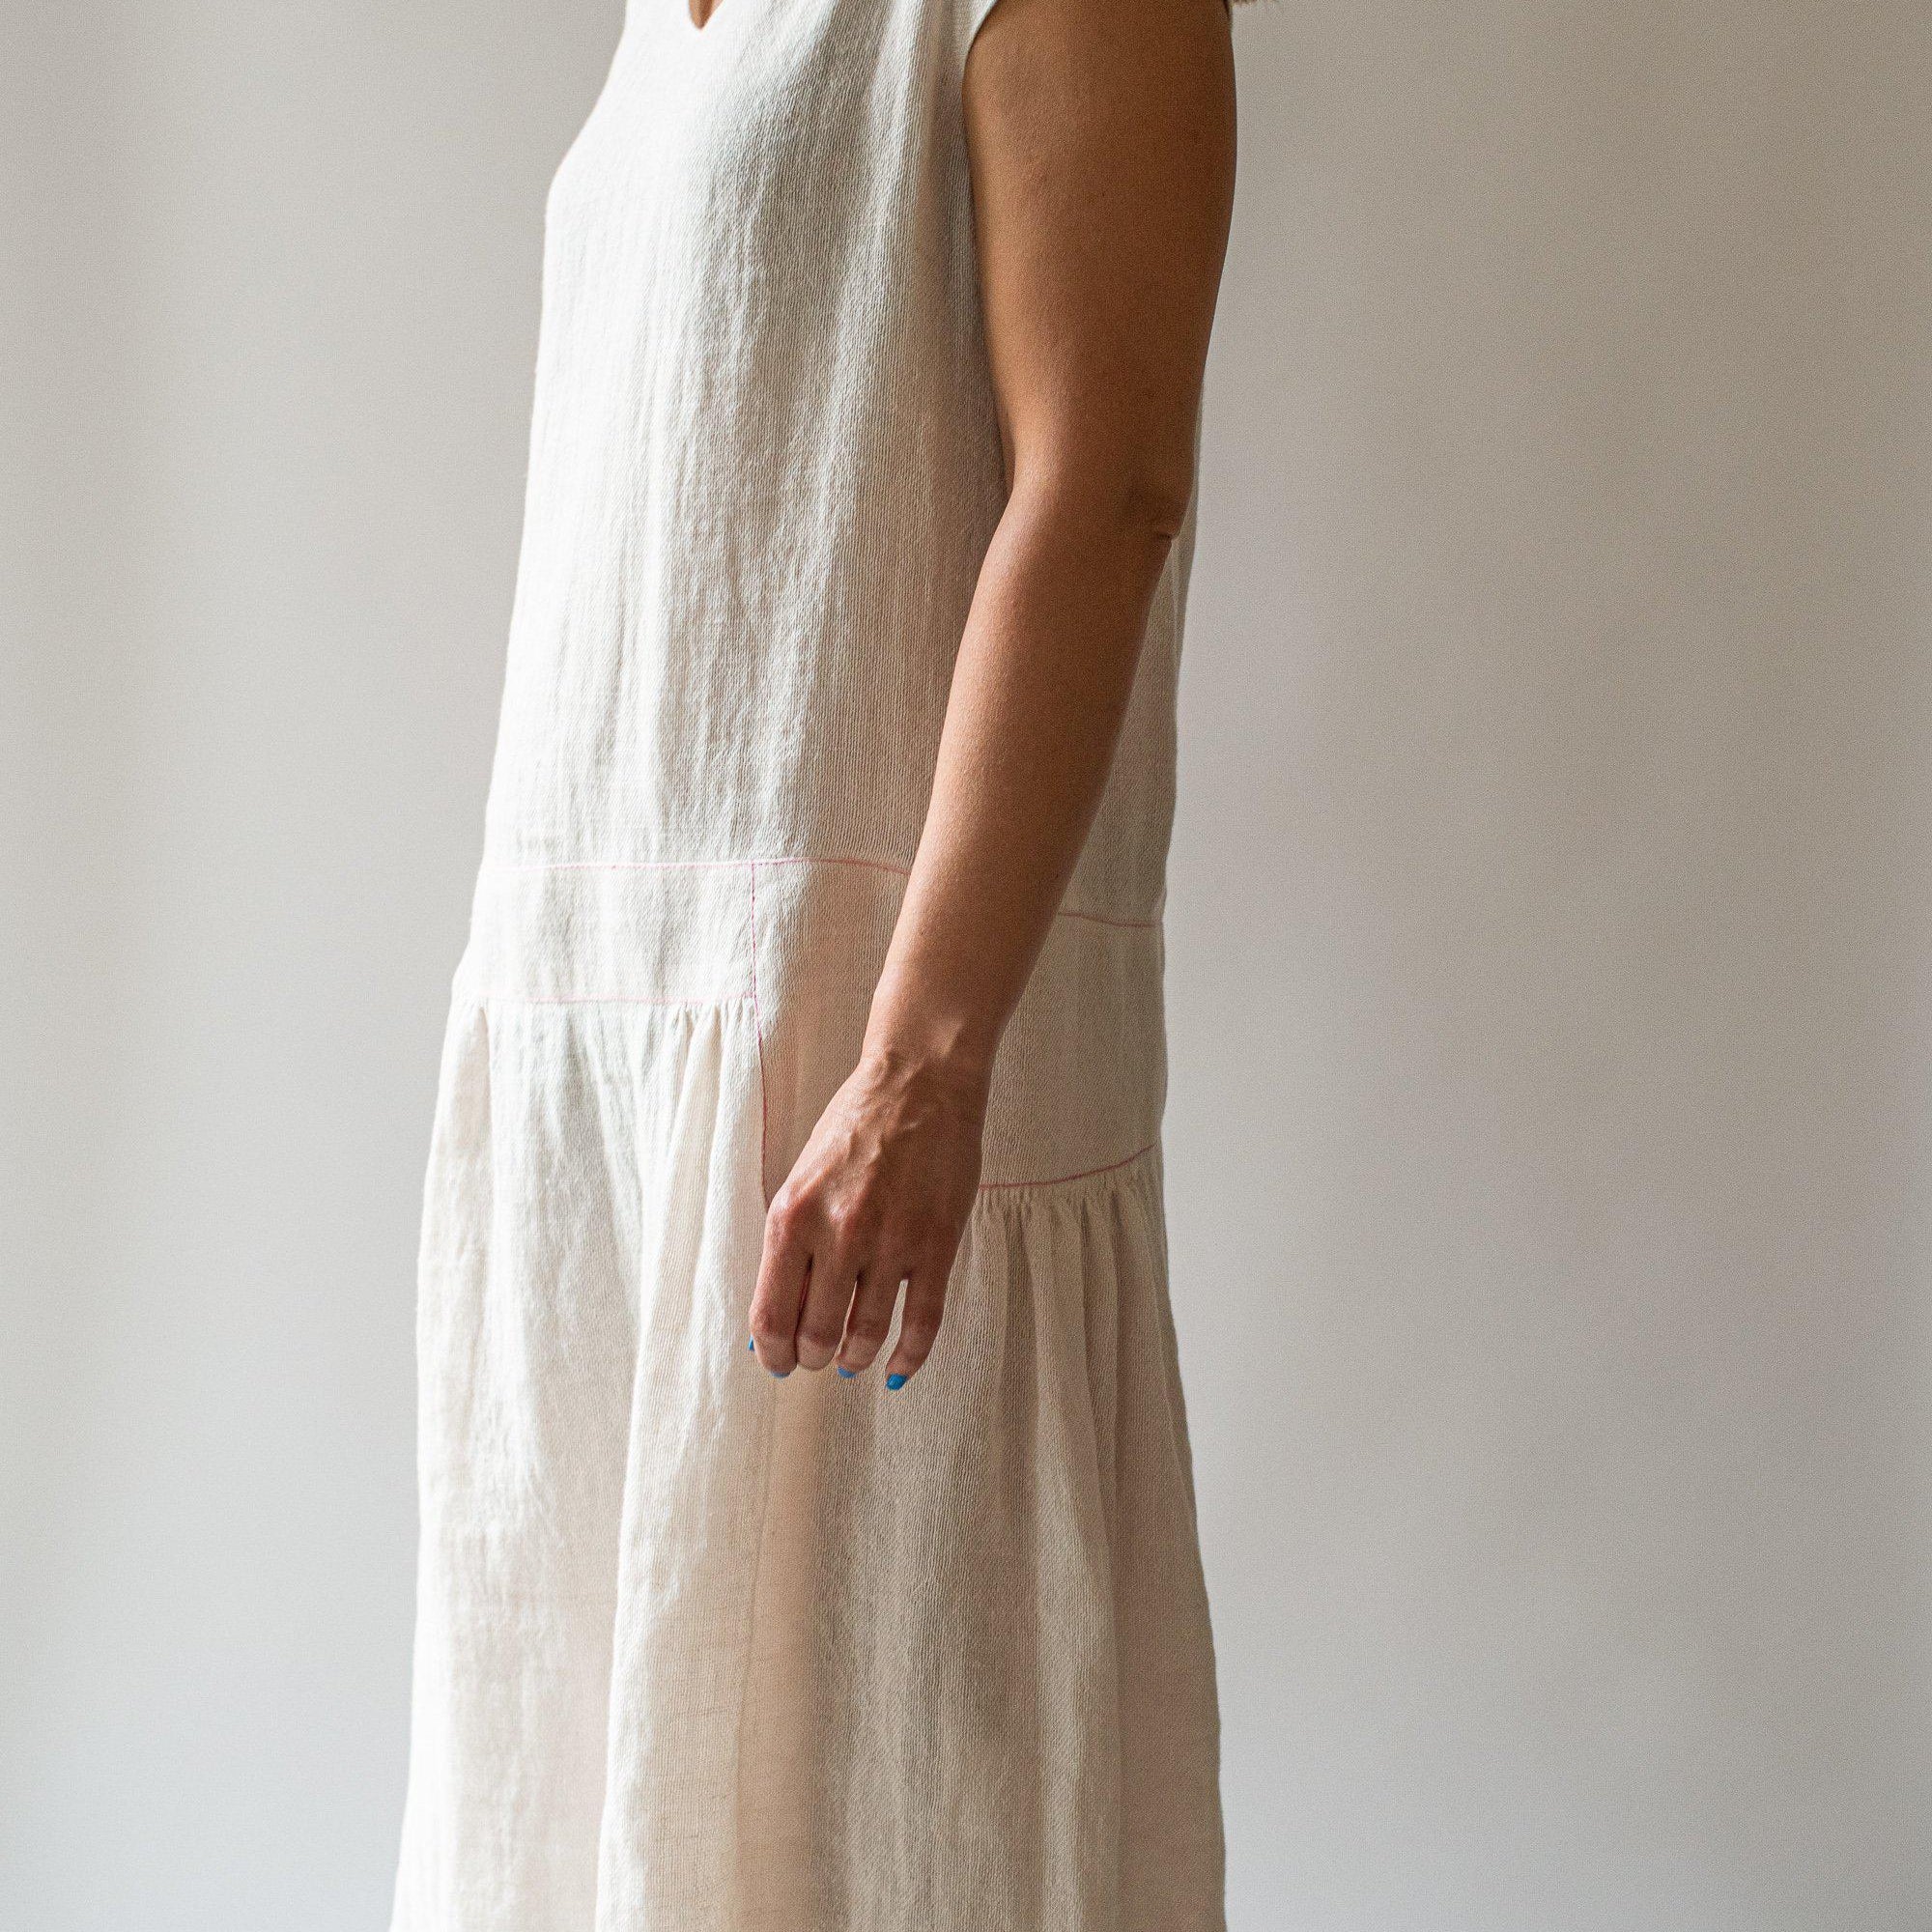 Linen summer dress Arni with dropped waist in light powder